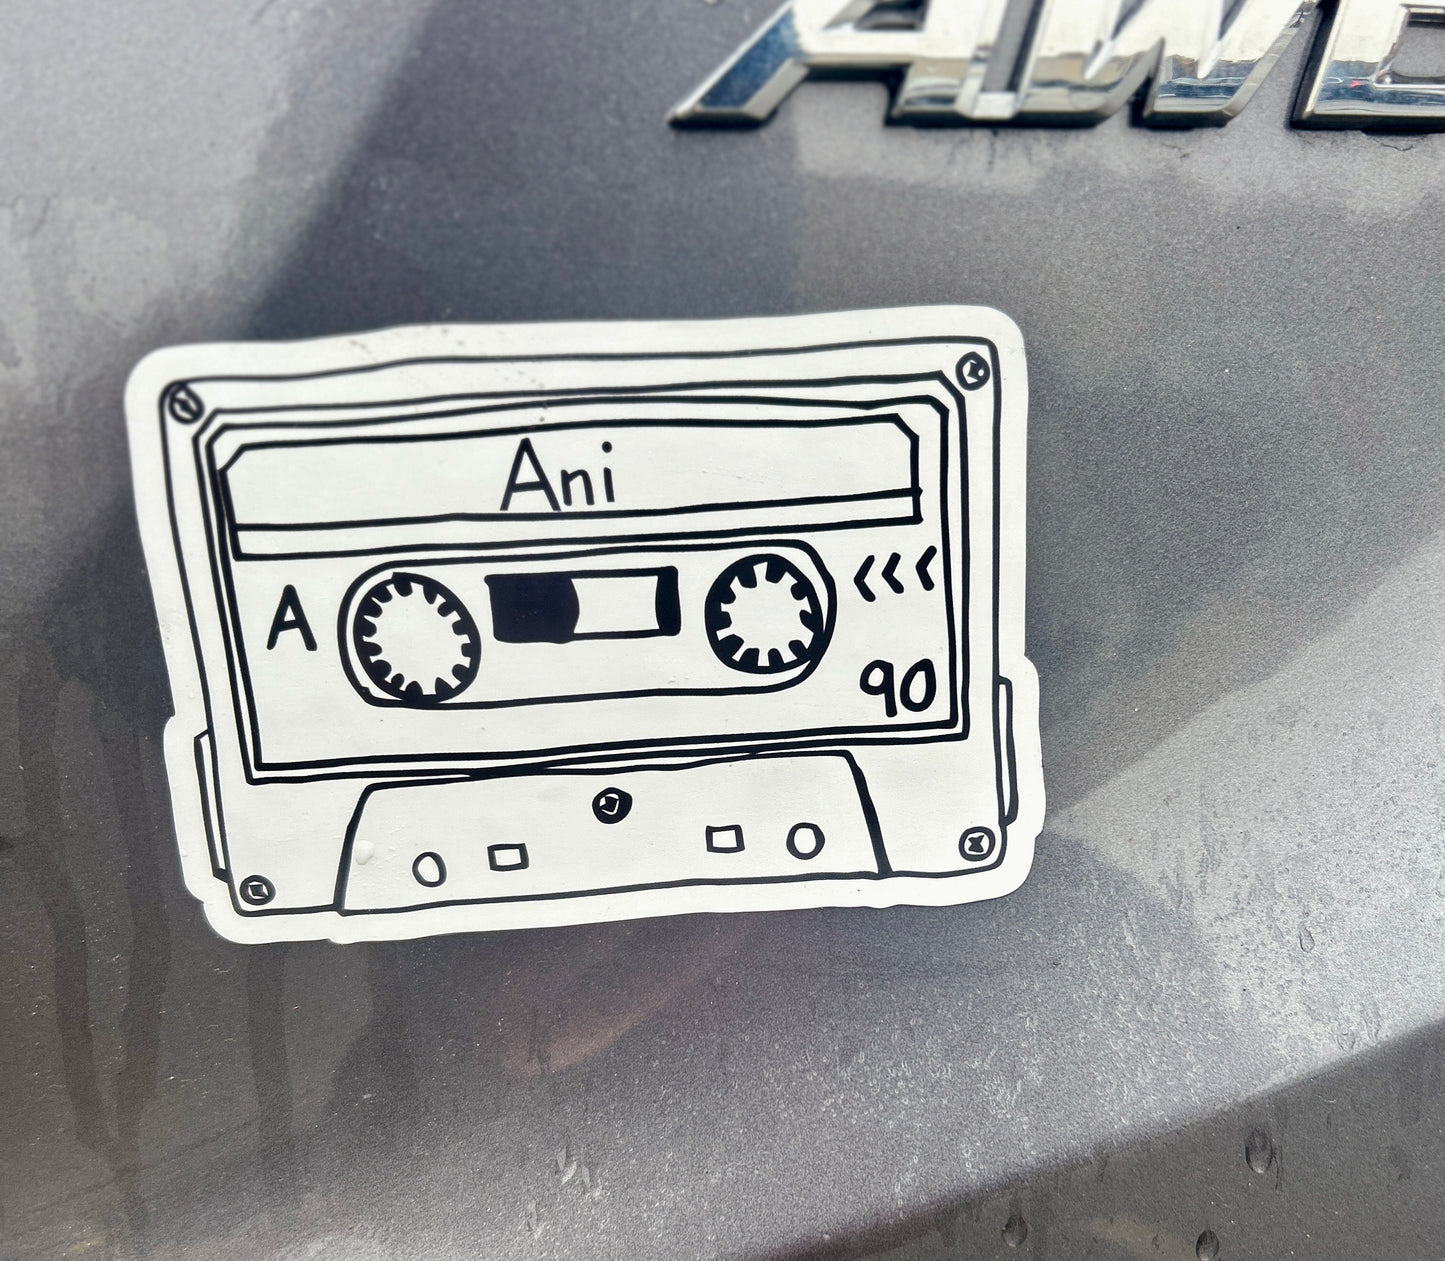 Cassette car magnet